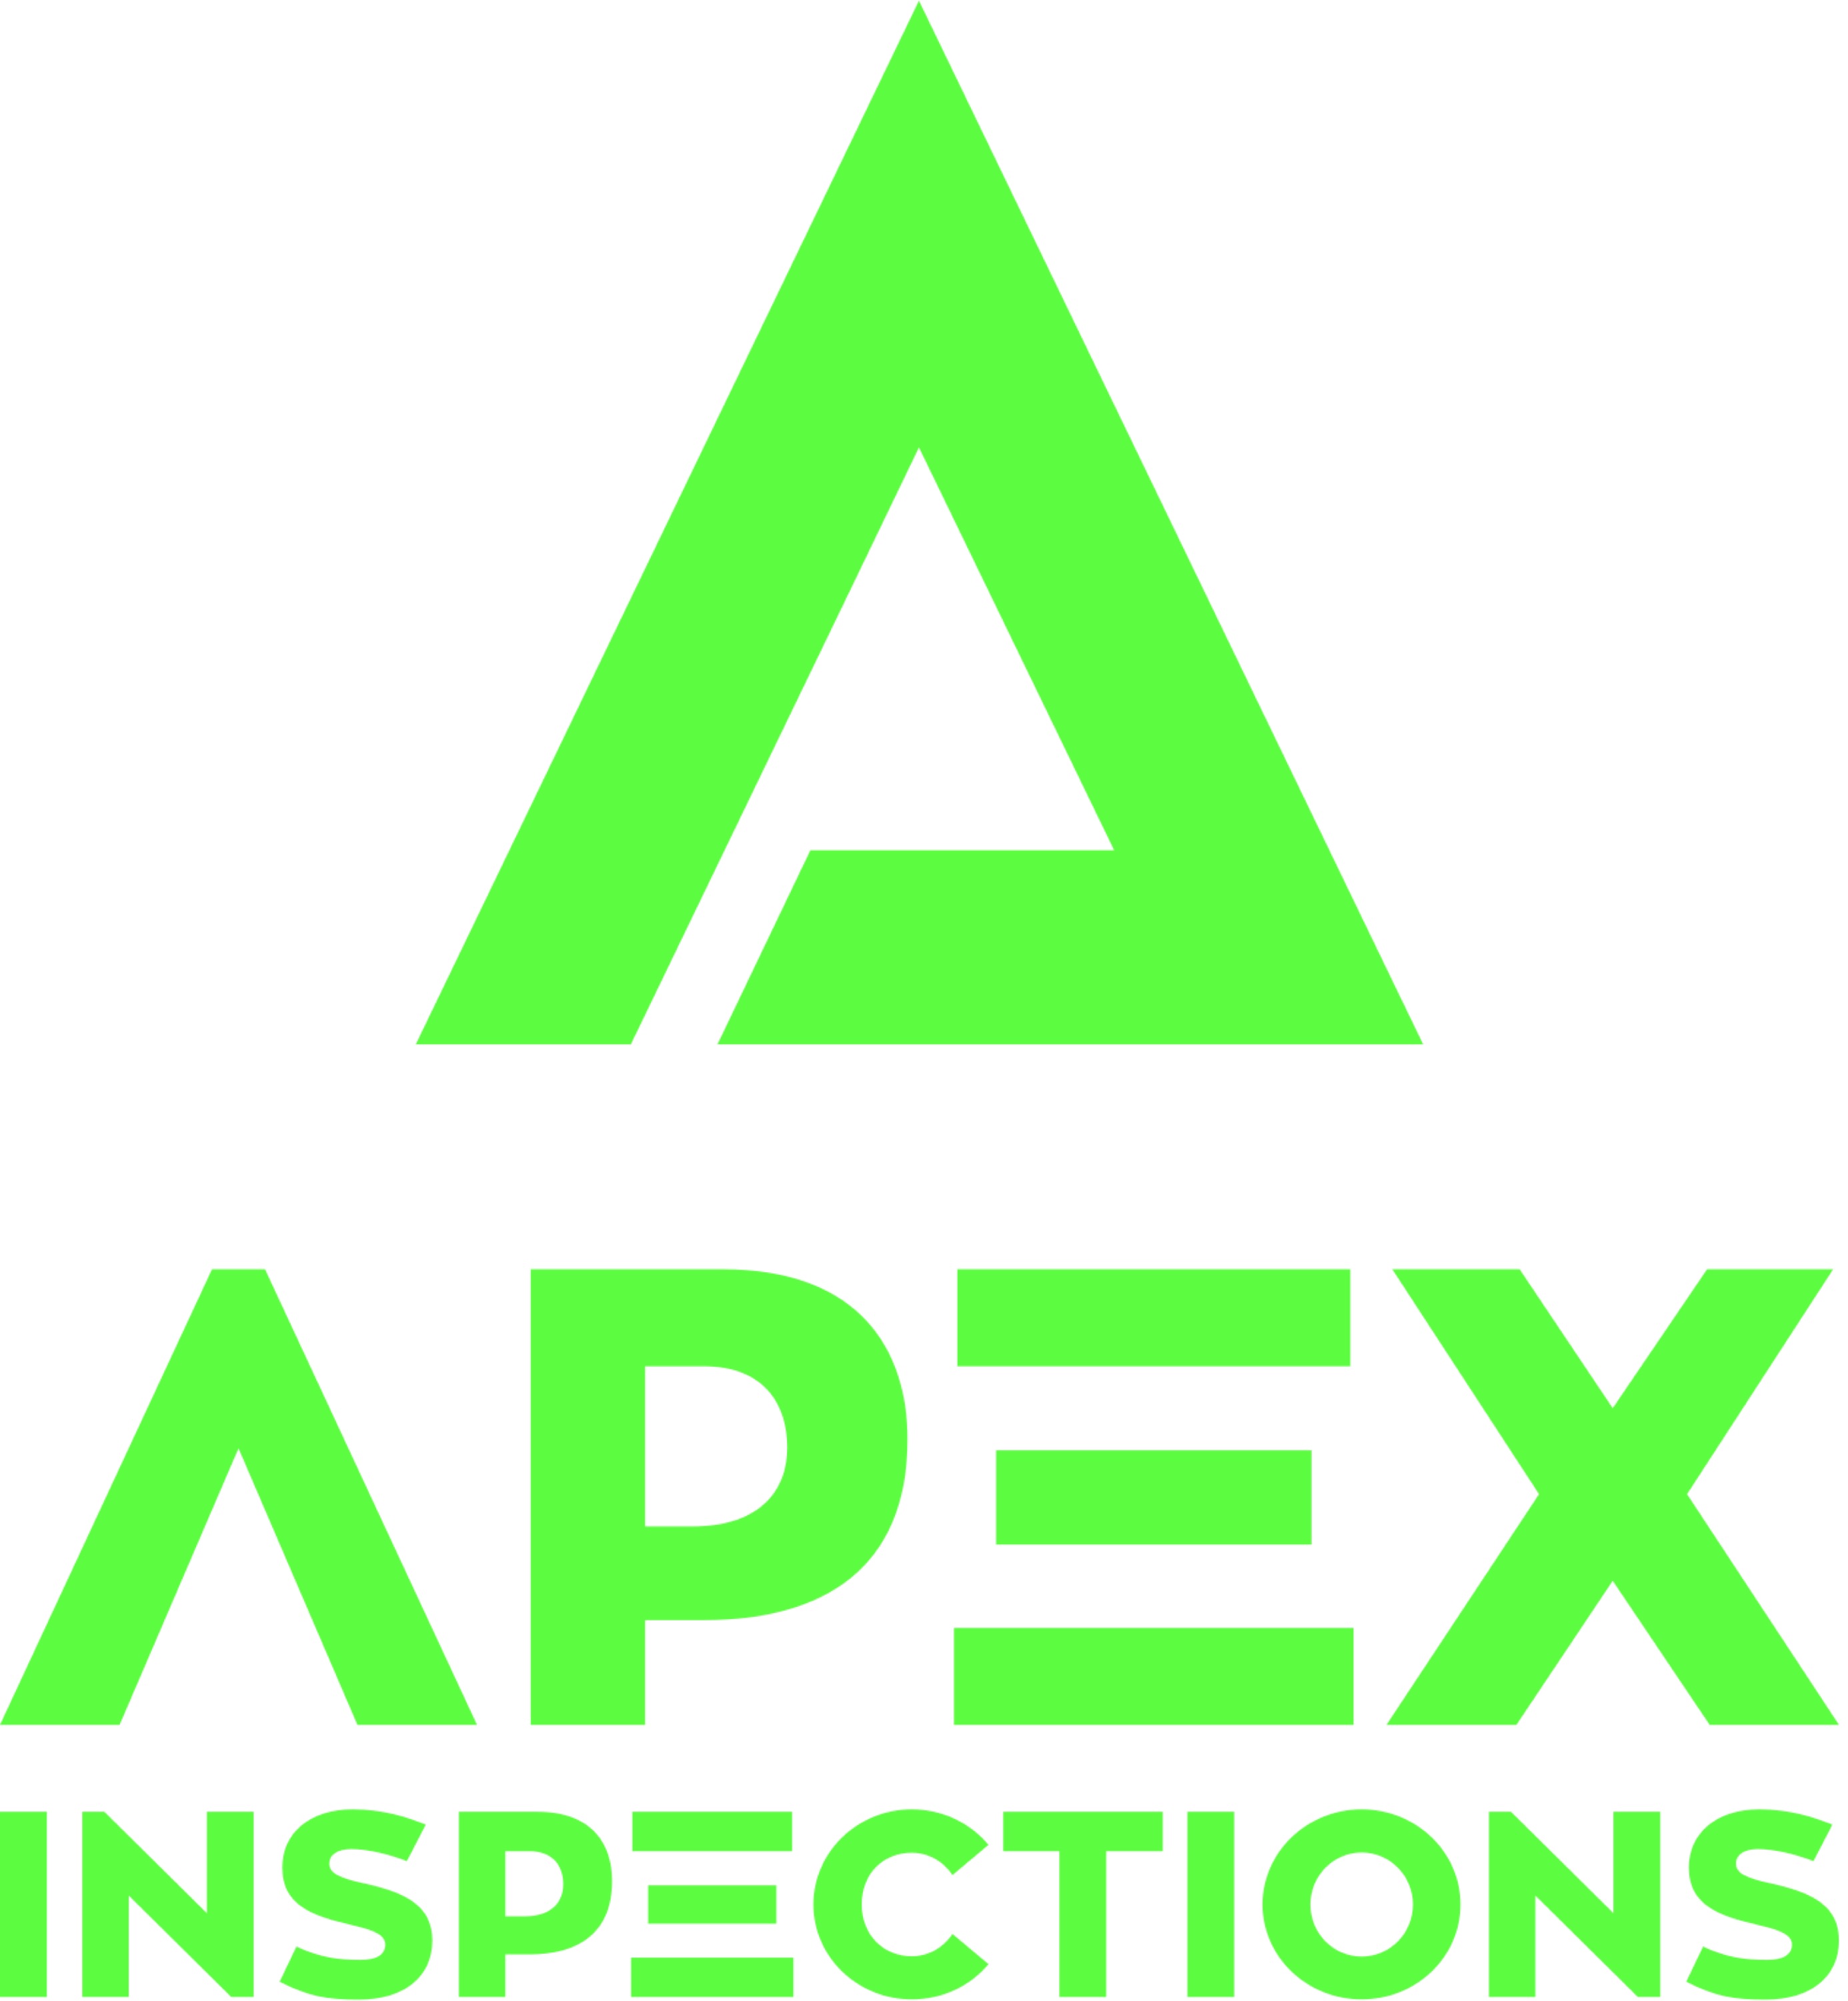 Apex Inspections LLC Logo